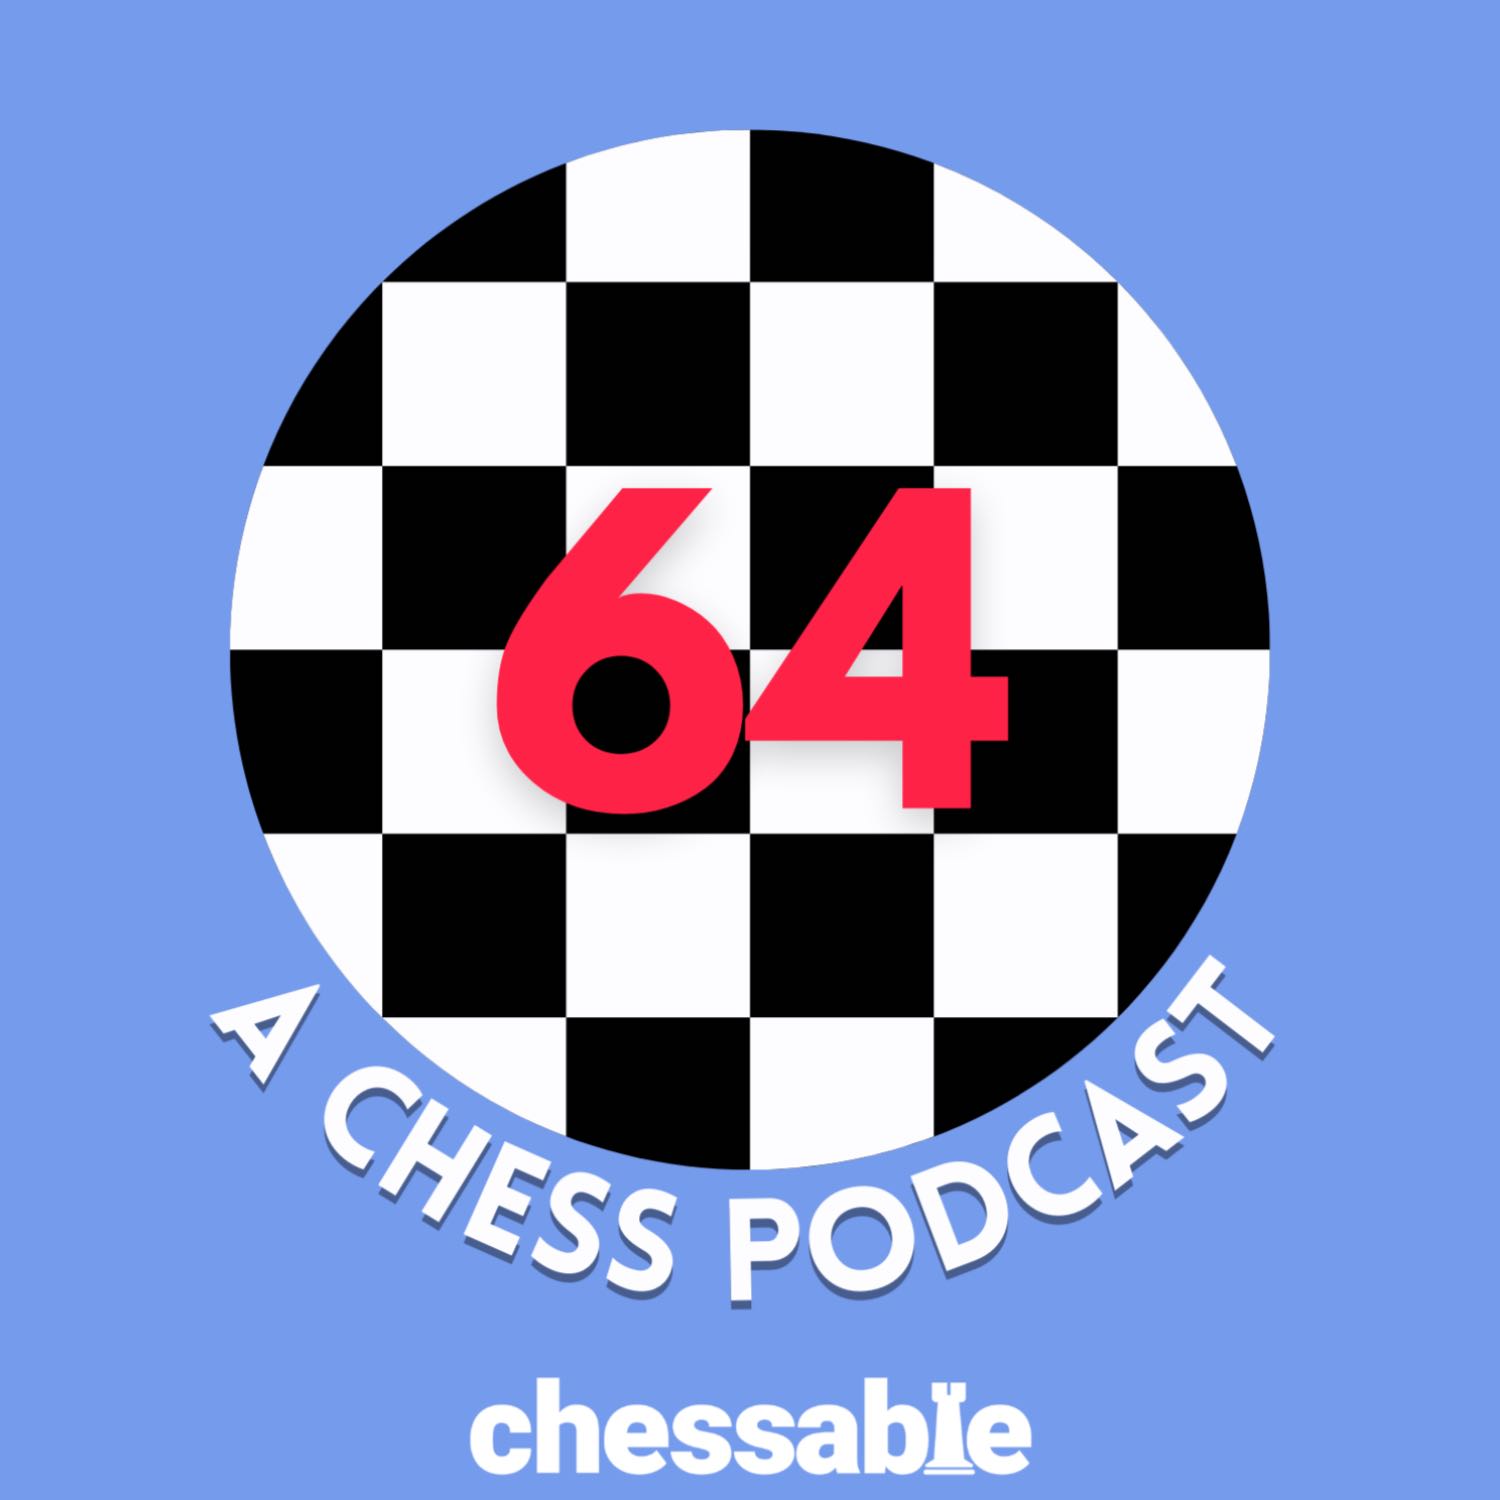 Escucha el podcast Perpetual Chess Podcast